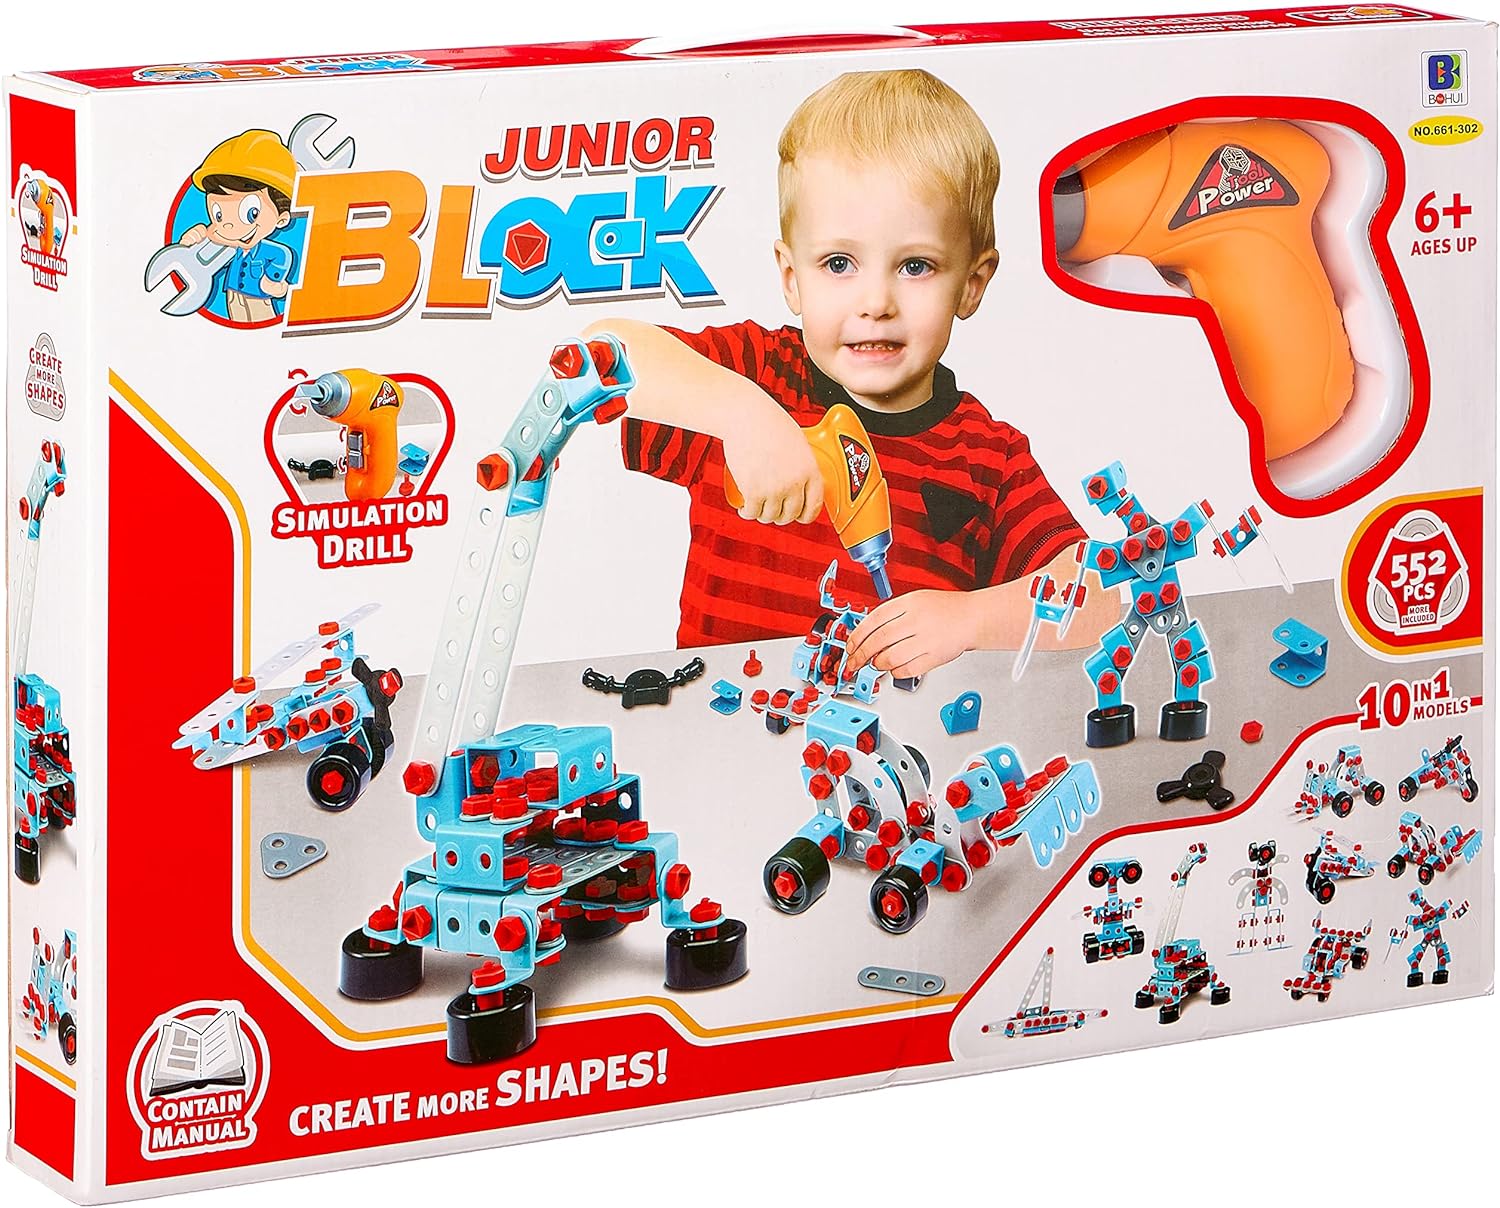 Junior block create more shapes - drill simulation 552 pcs